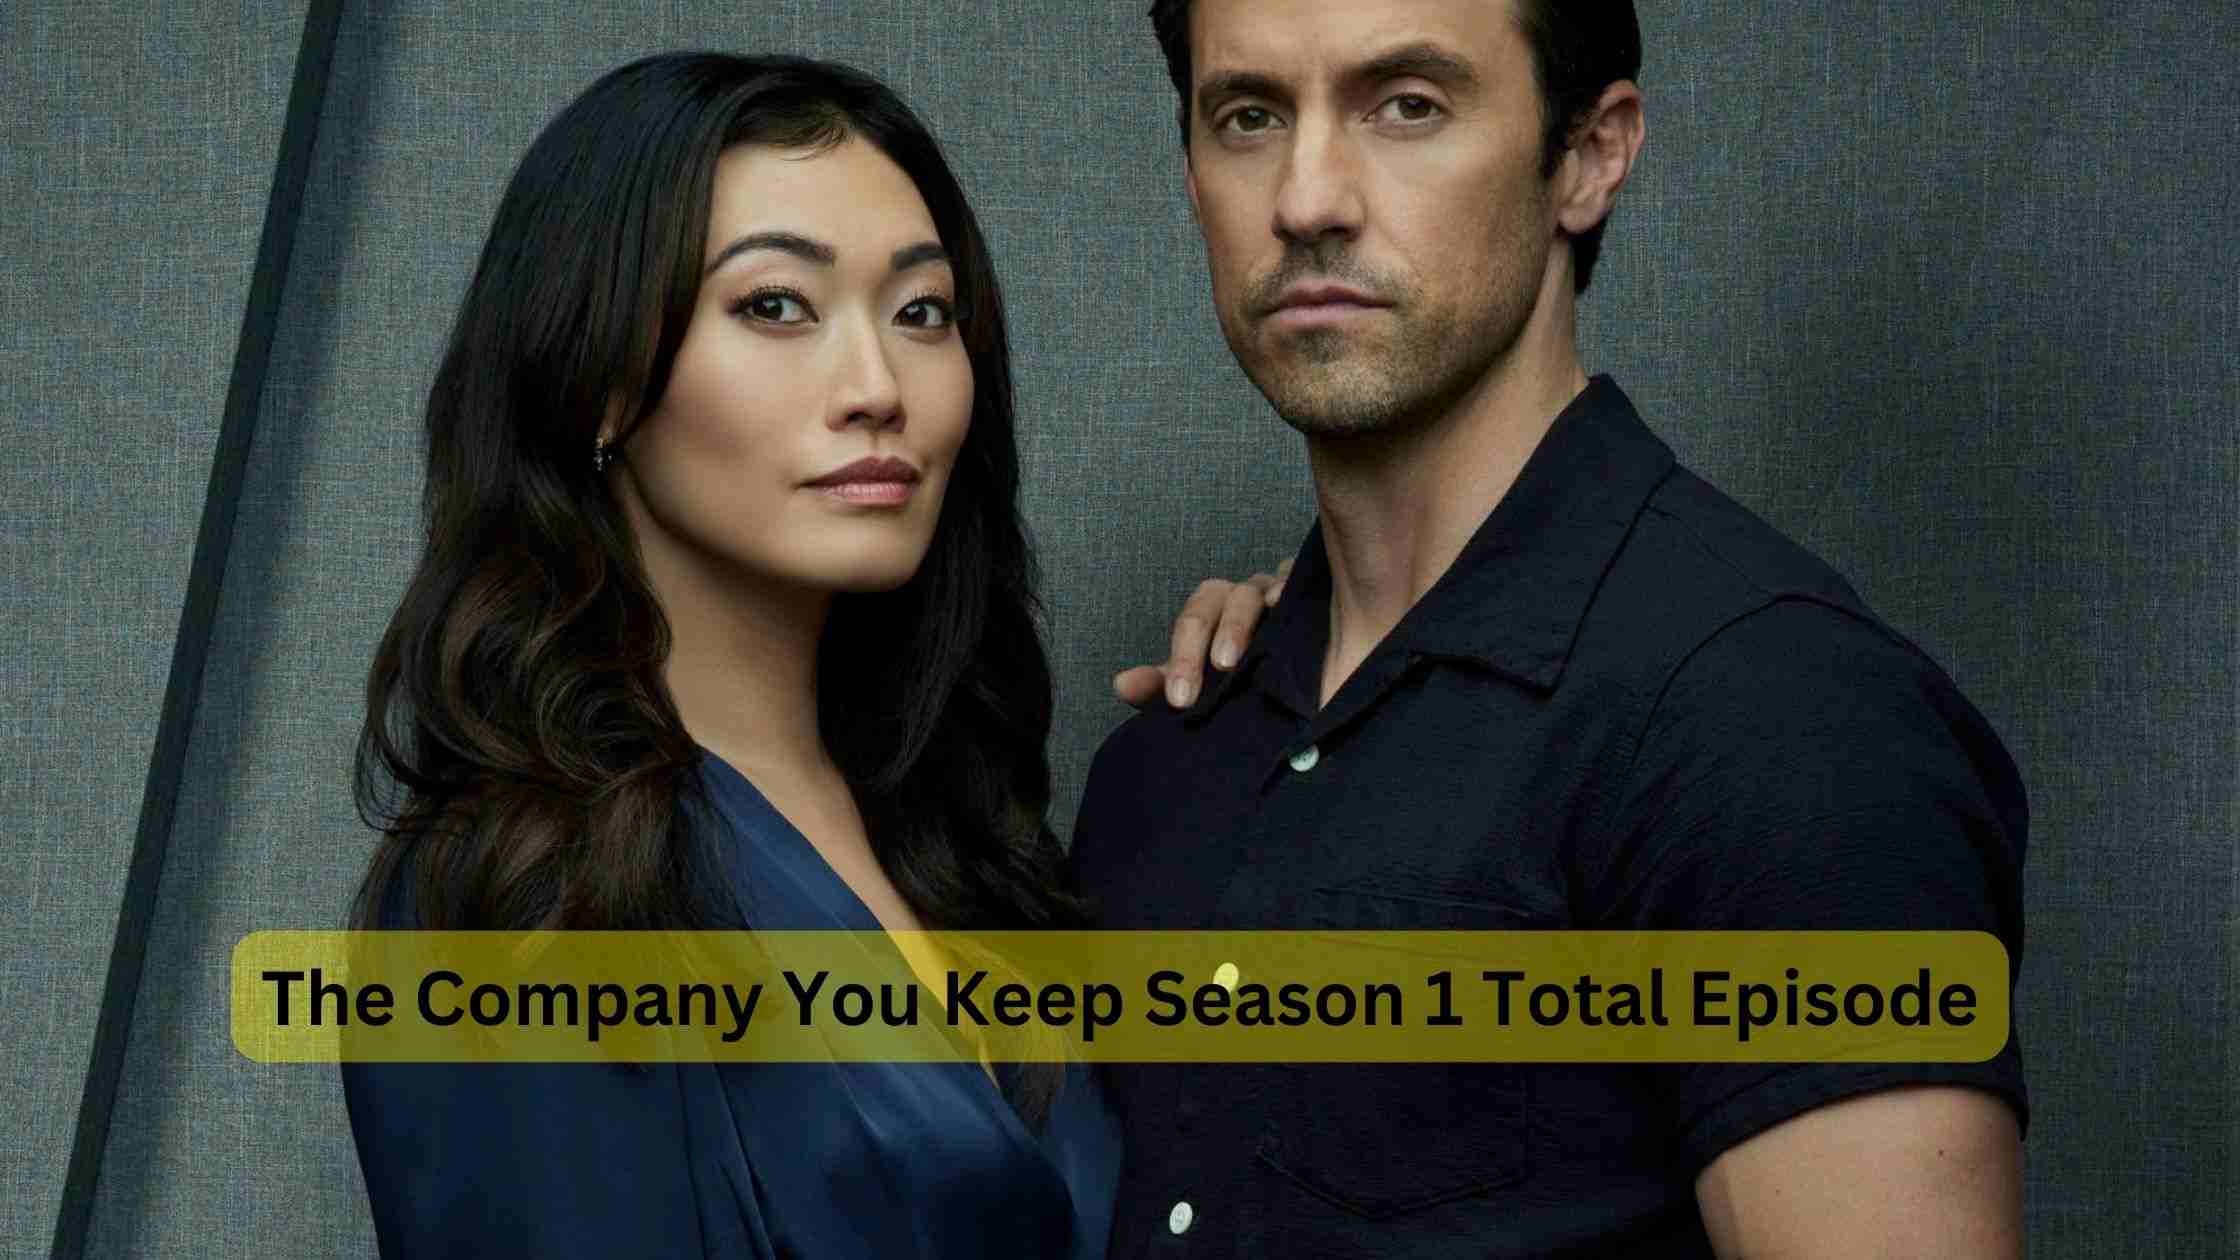 The Company You Keep Season 1 Total Episode